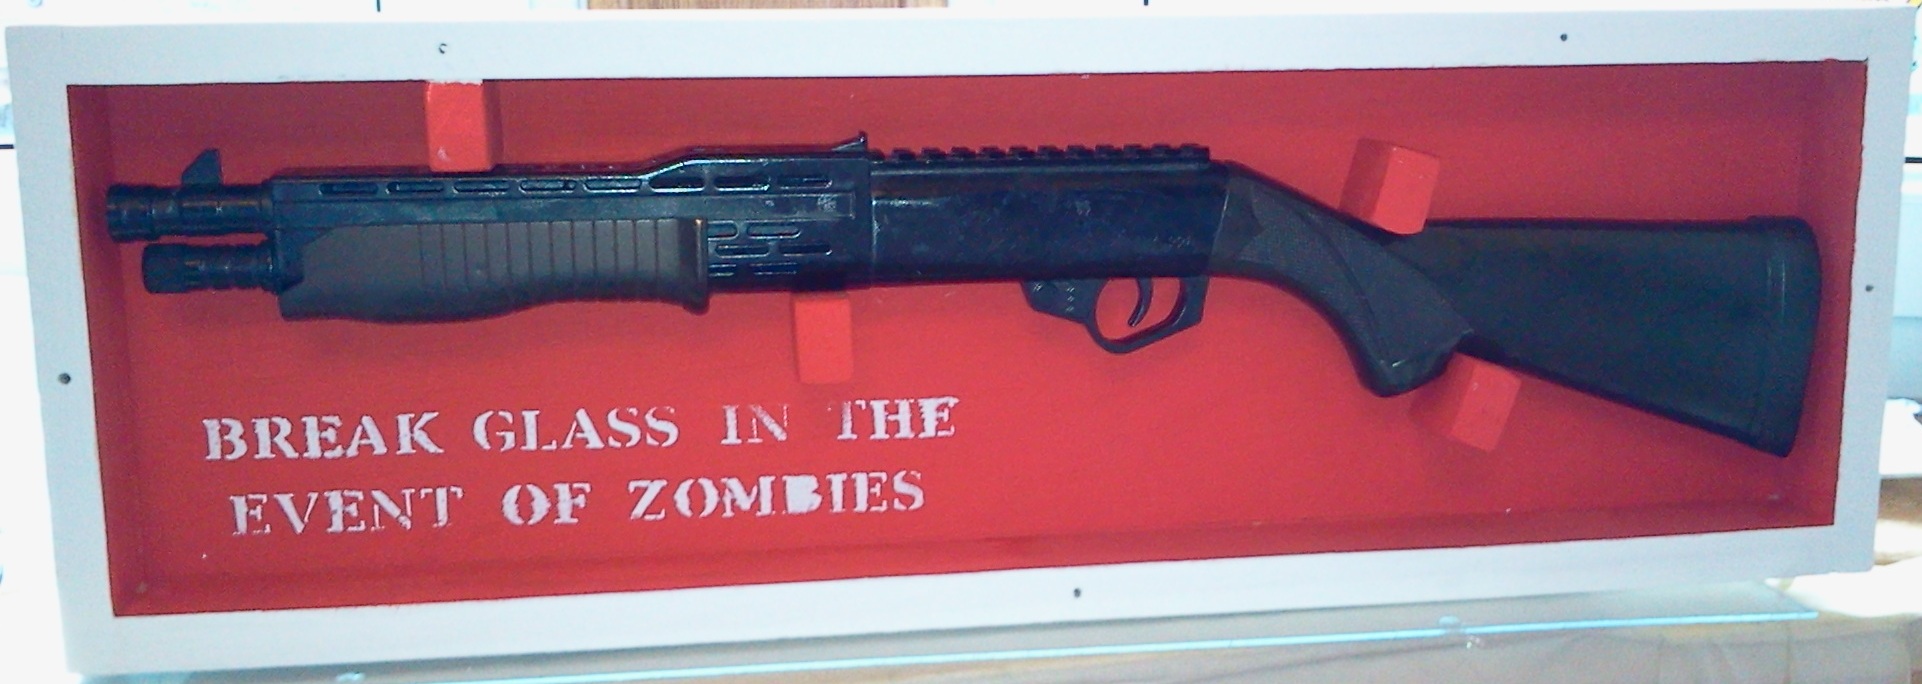 Zombie Defence Kit - Shotgun